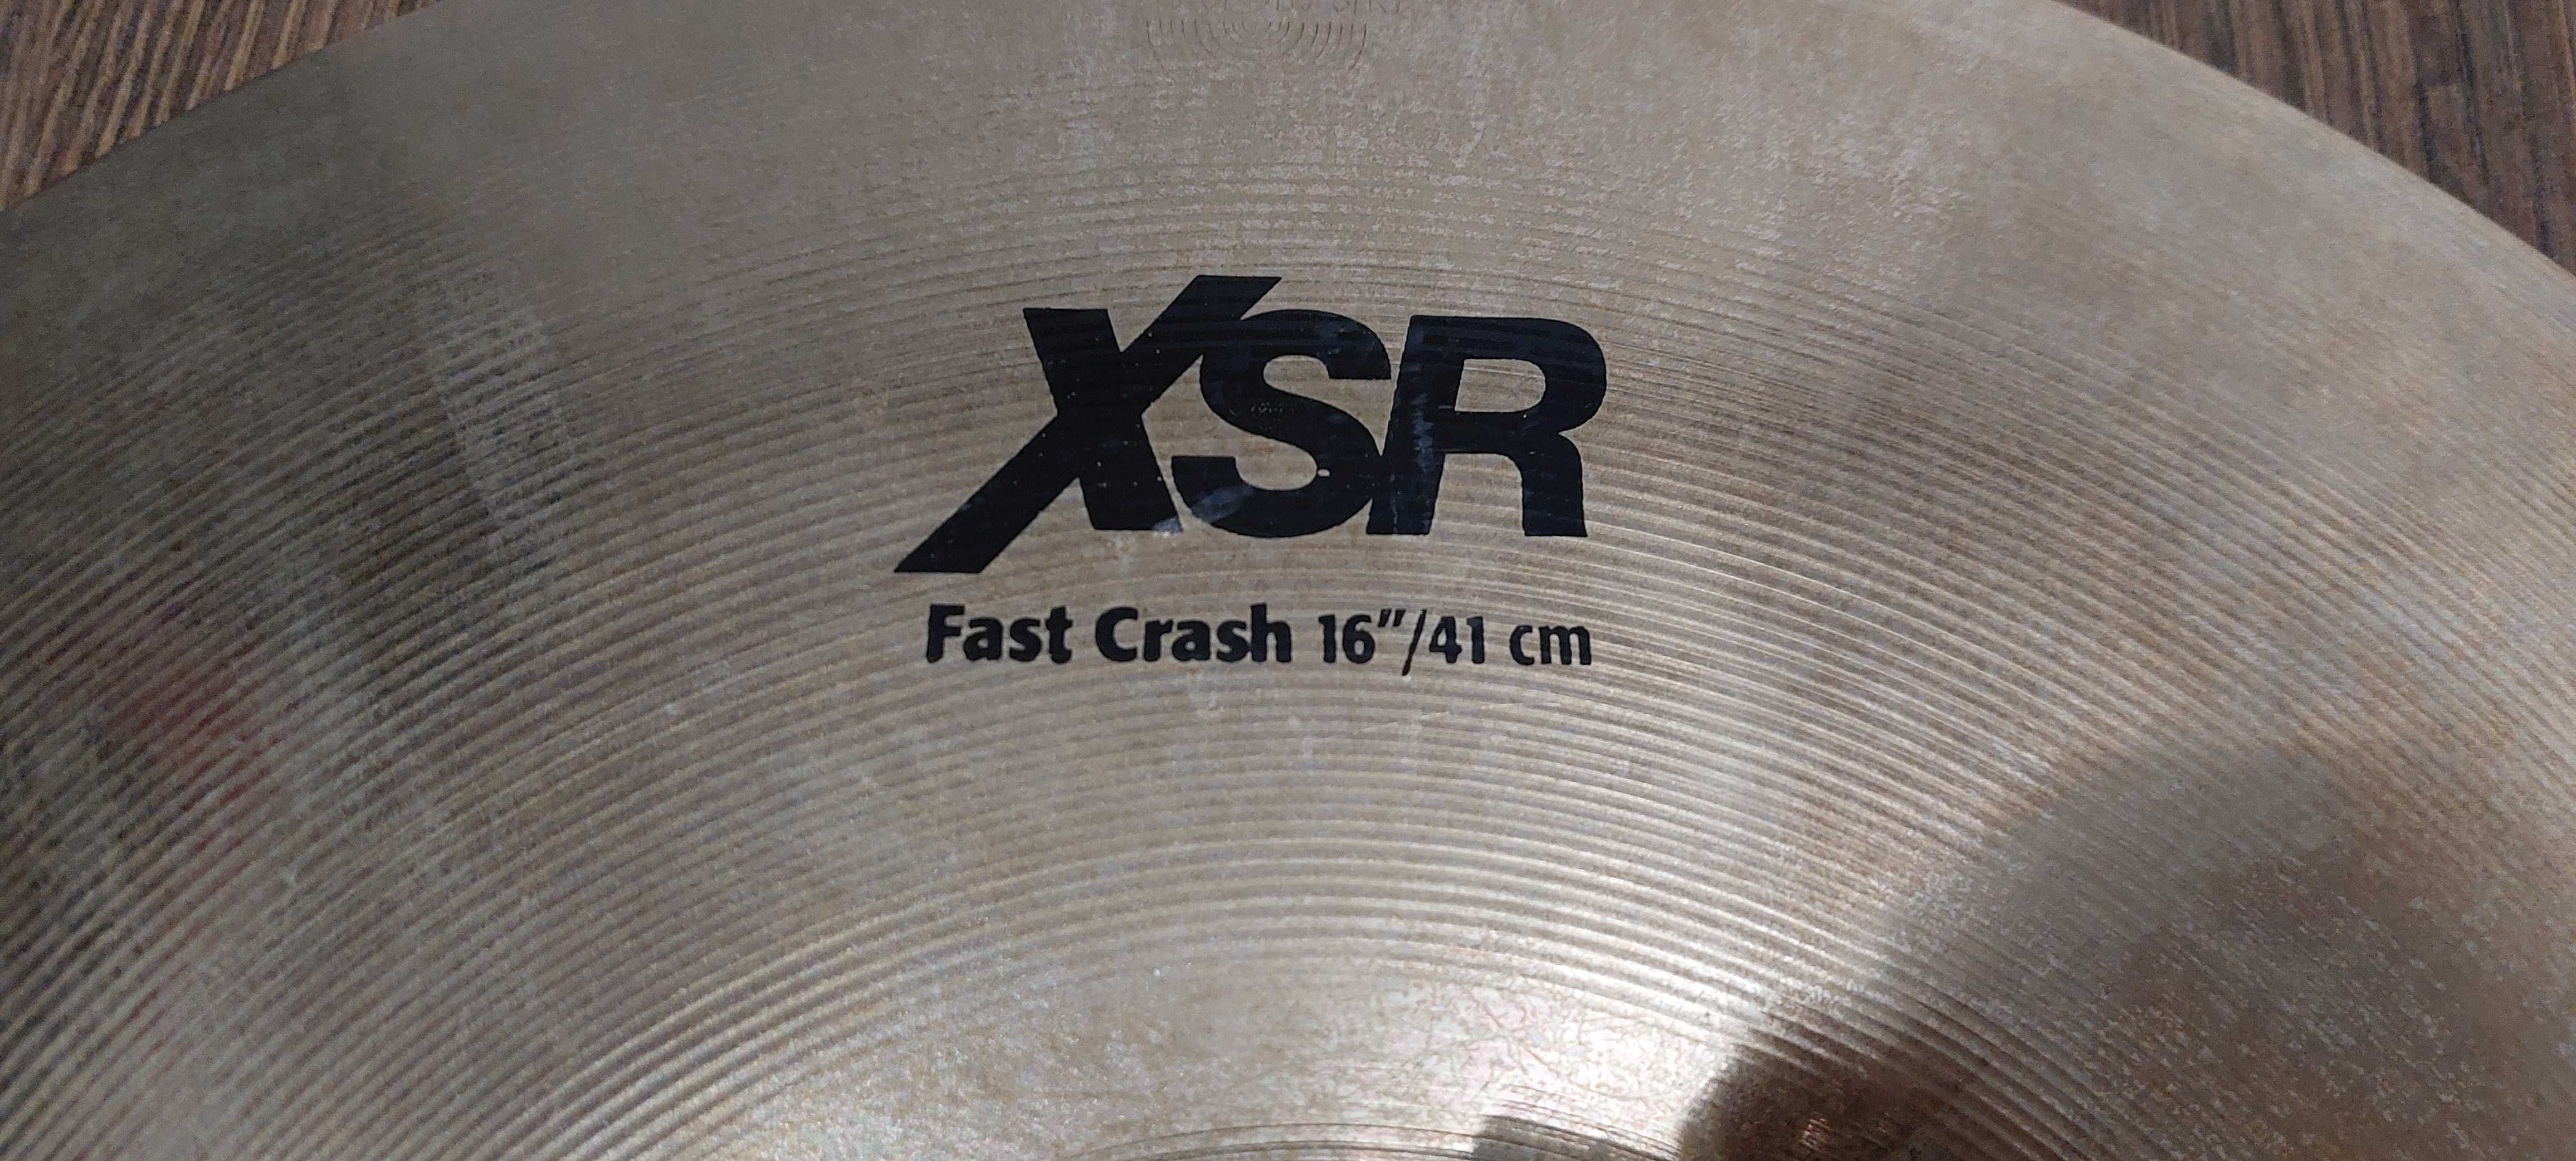 Sabian Crash 16" Ride 20" Seria XSR stan b.dobry